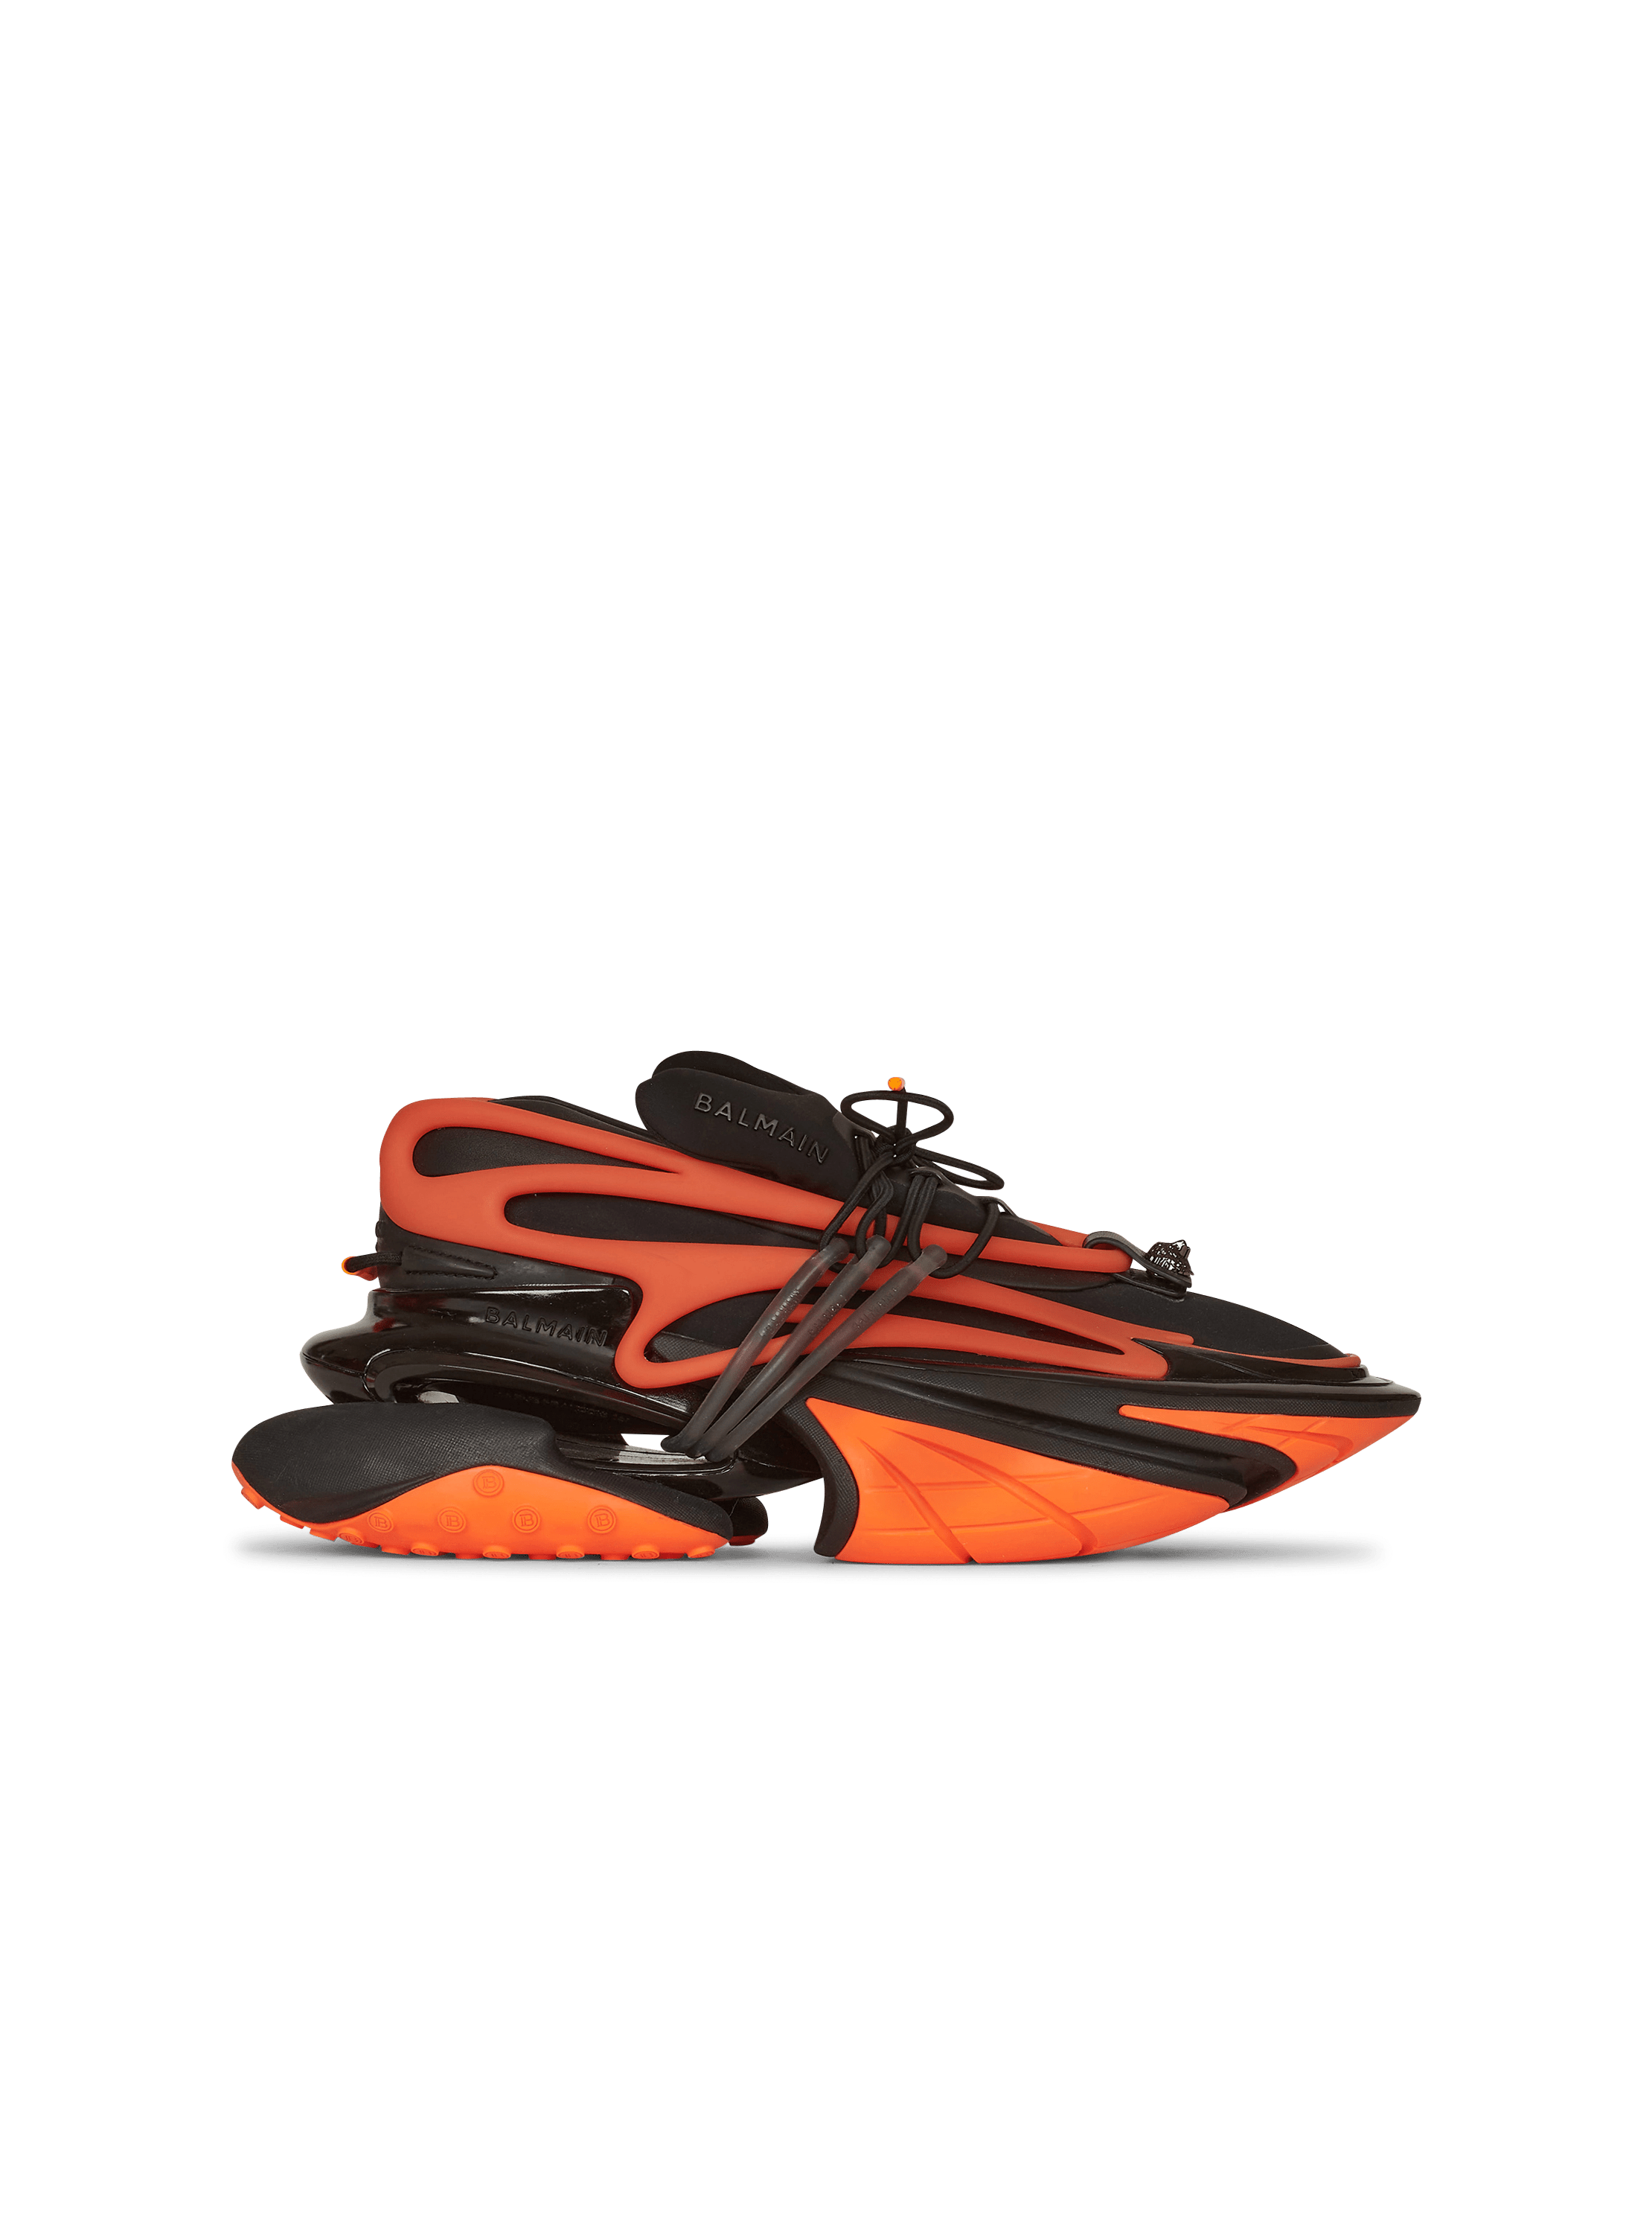 Unicorn Low-Top-Sneakers aus Neopren und Leder, orange, hi-res